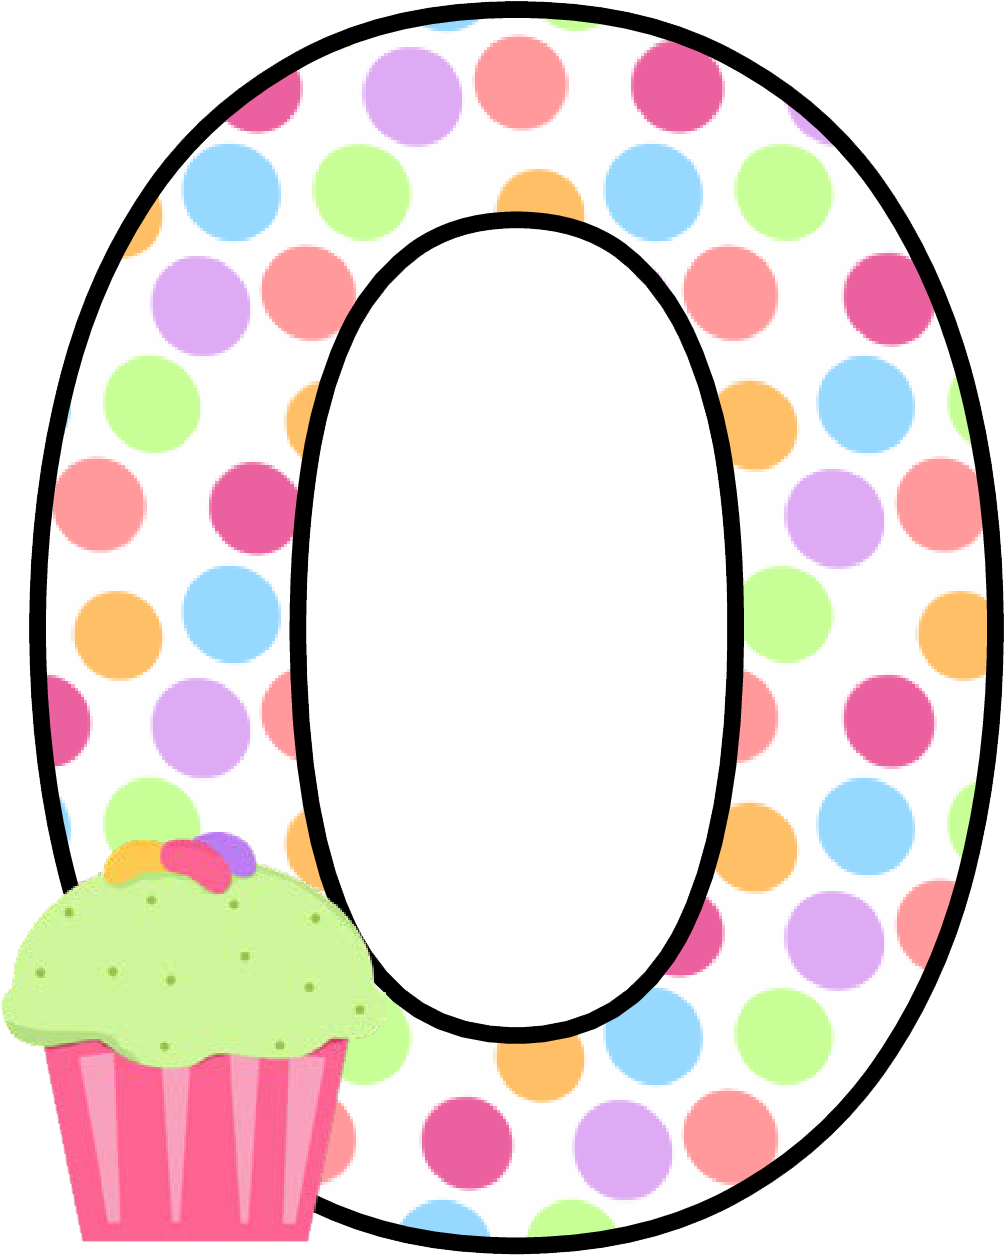 Ch B *✿* Alfabeto Cupcake De Kid Sparkz - Alphabet Letters With Cupcakes Design (1073x1324)